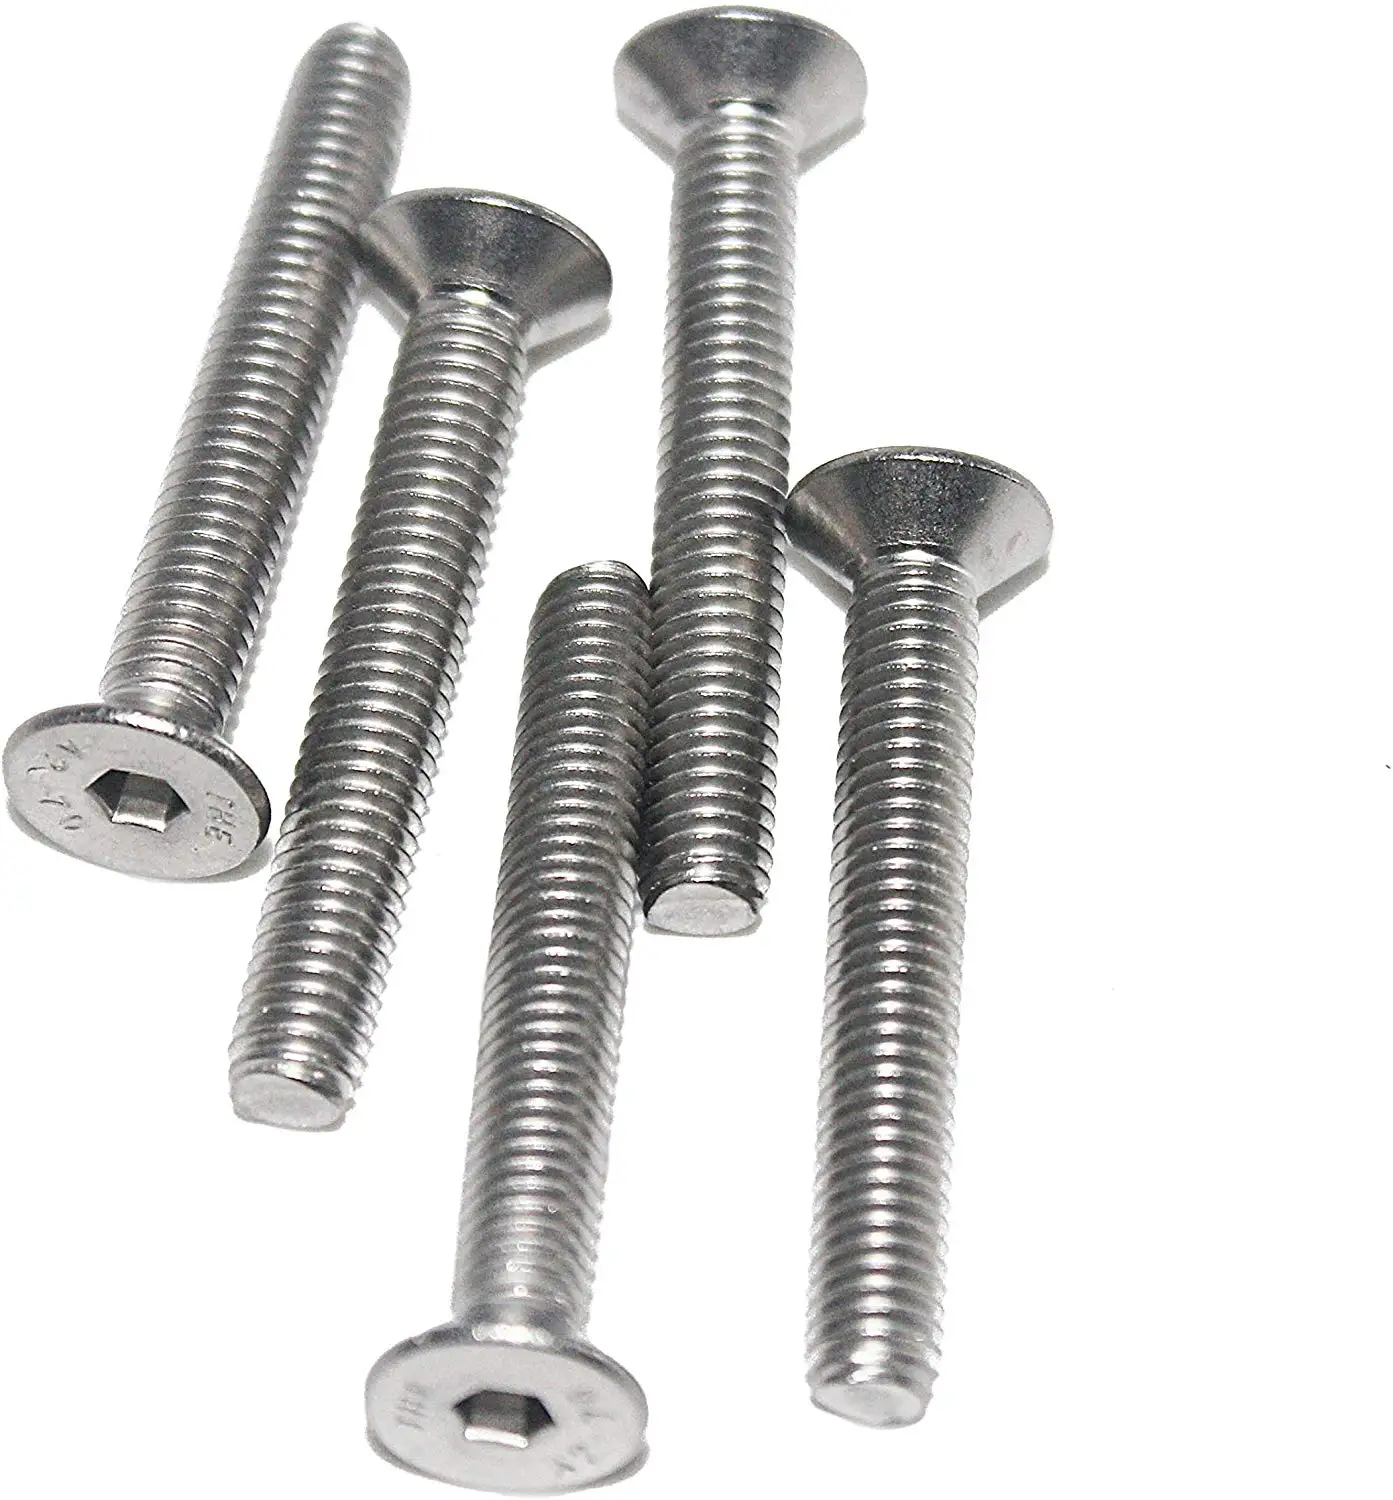 

Fullerkreg 18-8 Stainless Steel Hex Drive Flat Head Screw M10 x 1.5 mm Thread Size, 30 mm Long,Packs of 10